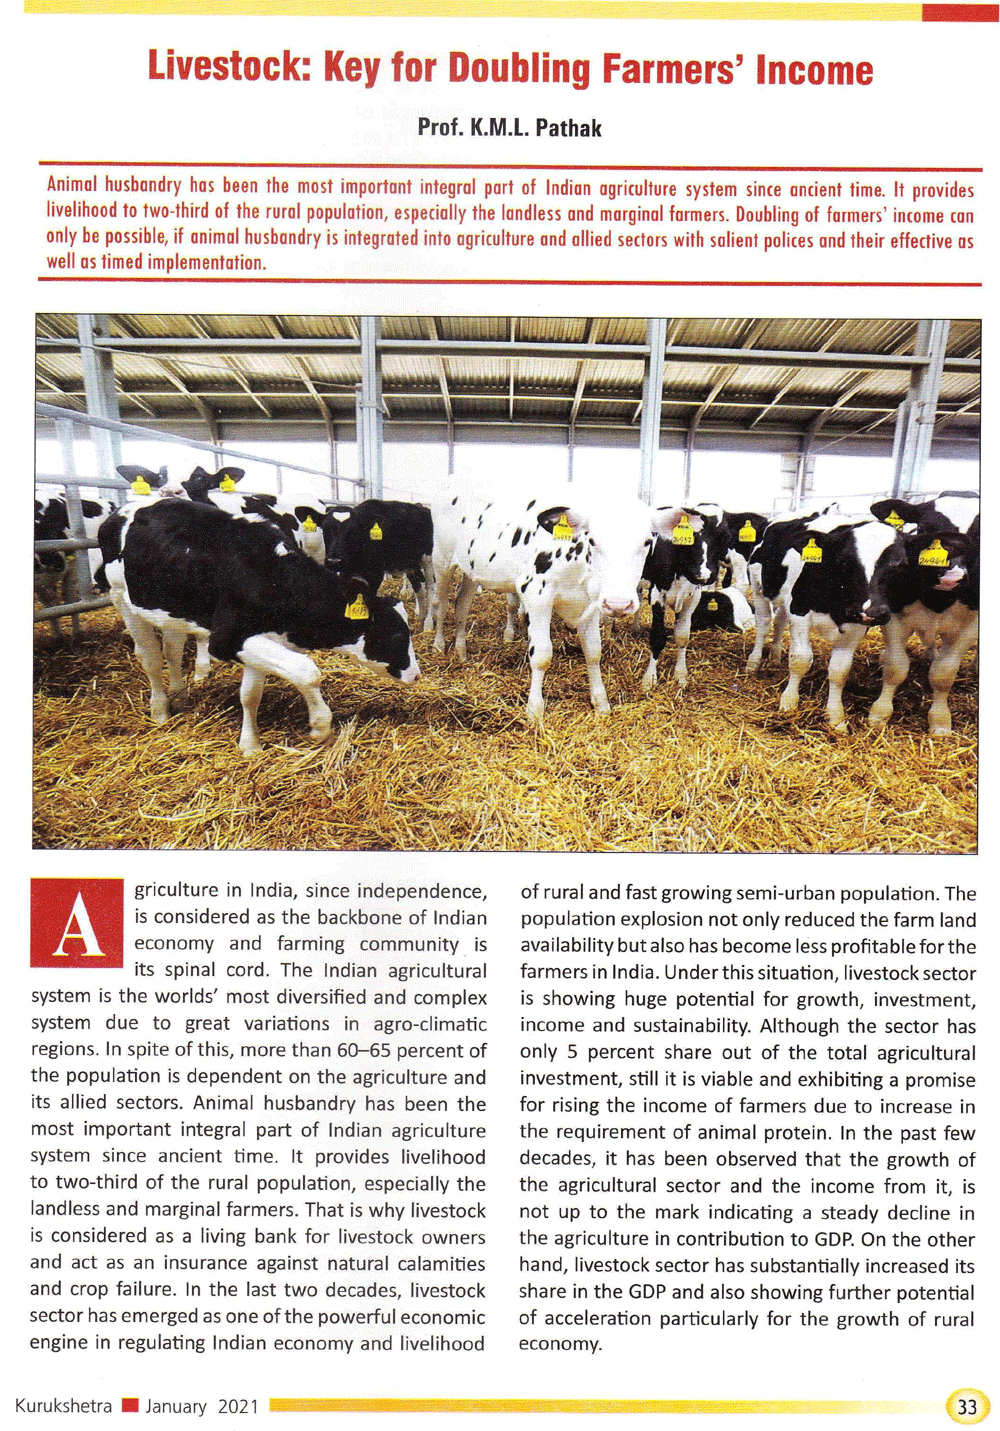 Kurukshetra : Livestock : Key for Doubling Farmers' Income (16-01-2021) -  AFEIAS